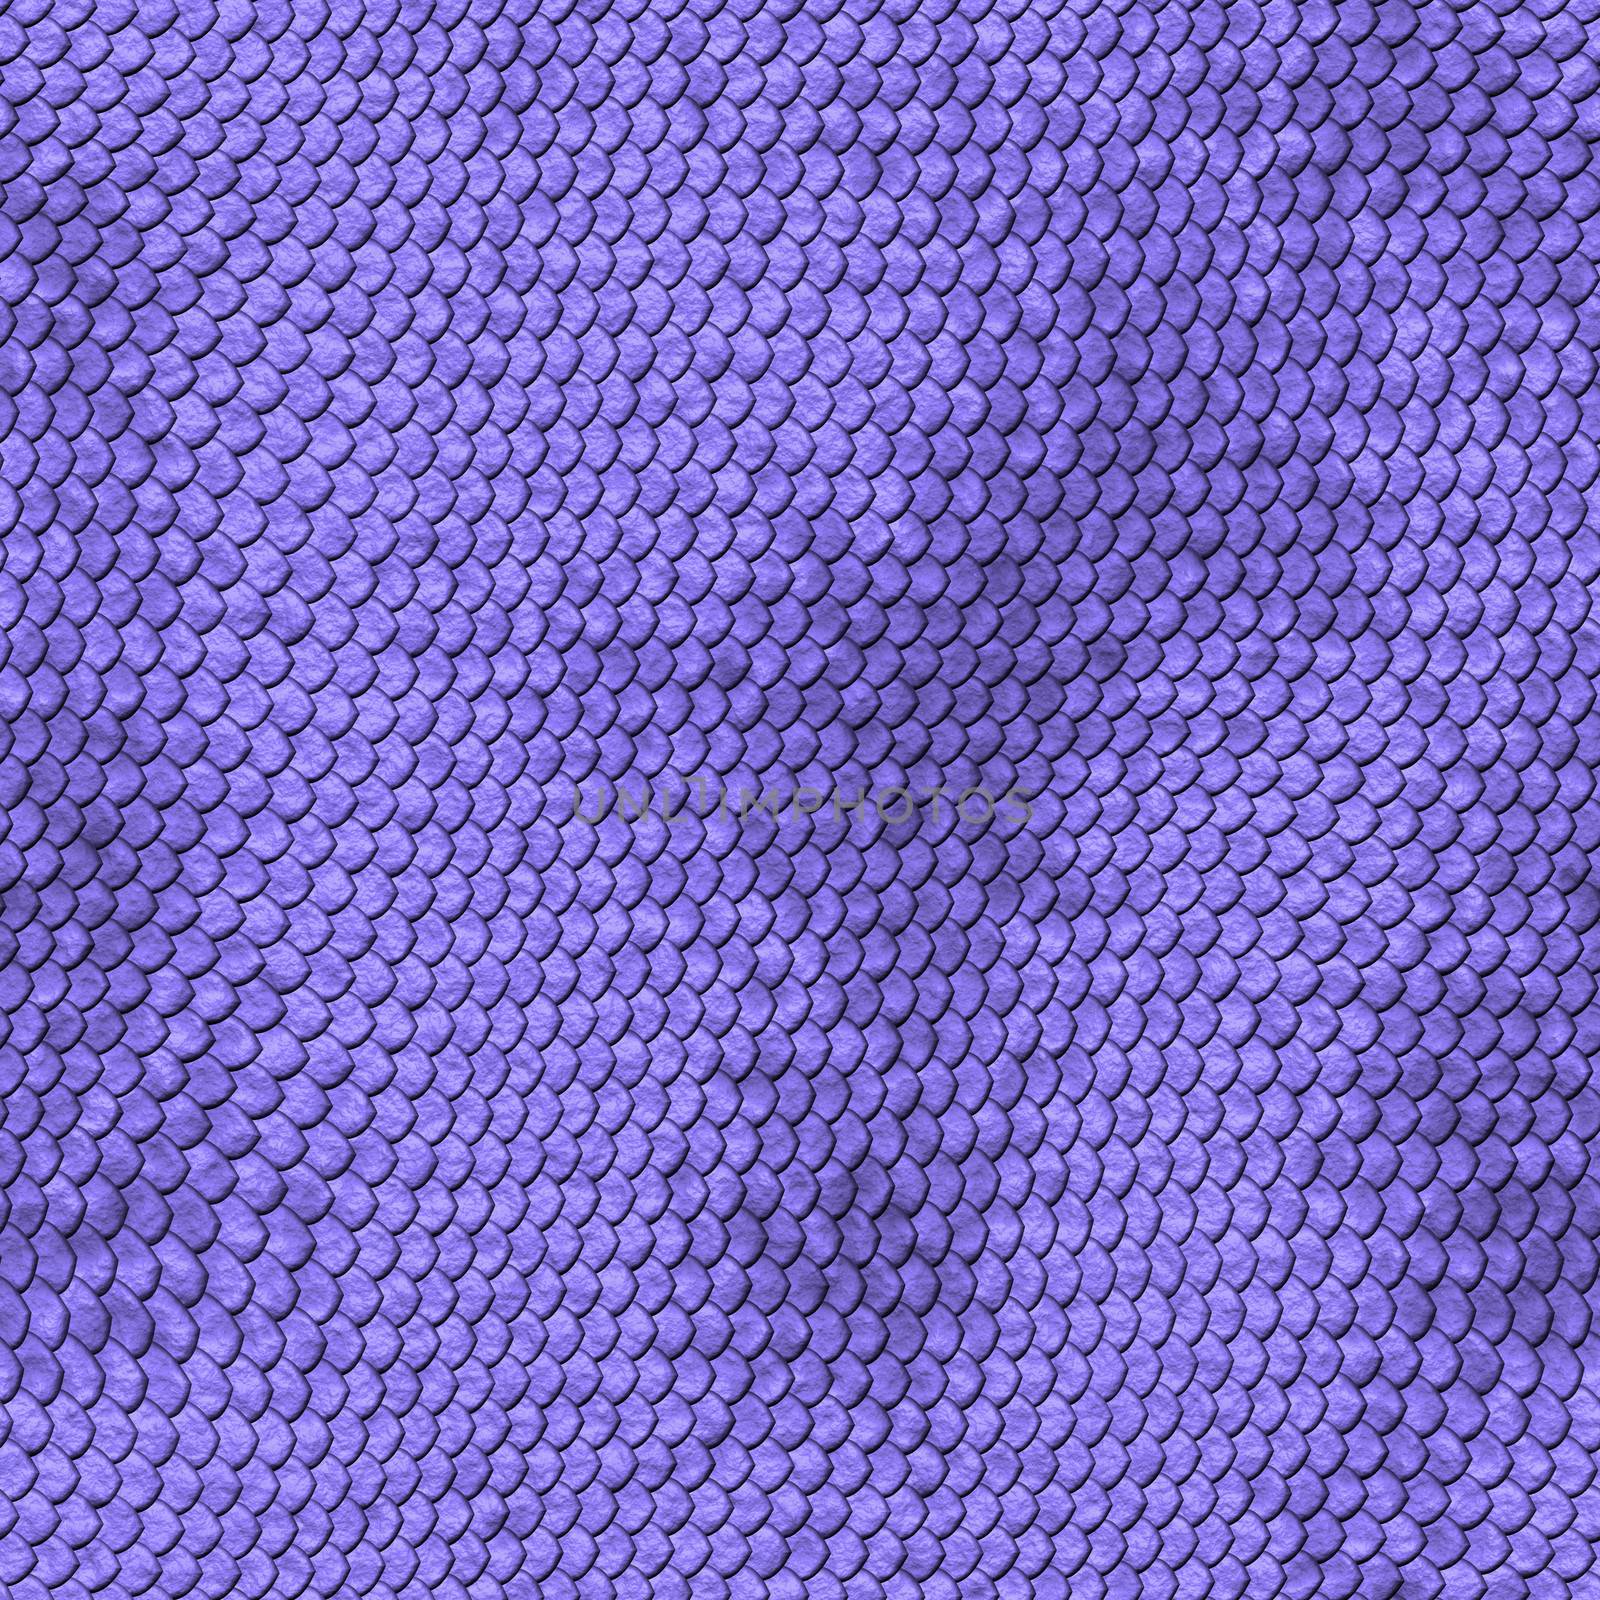 Snakeskin leather, purple background by sfinks